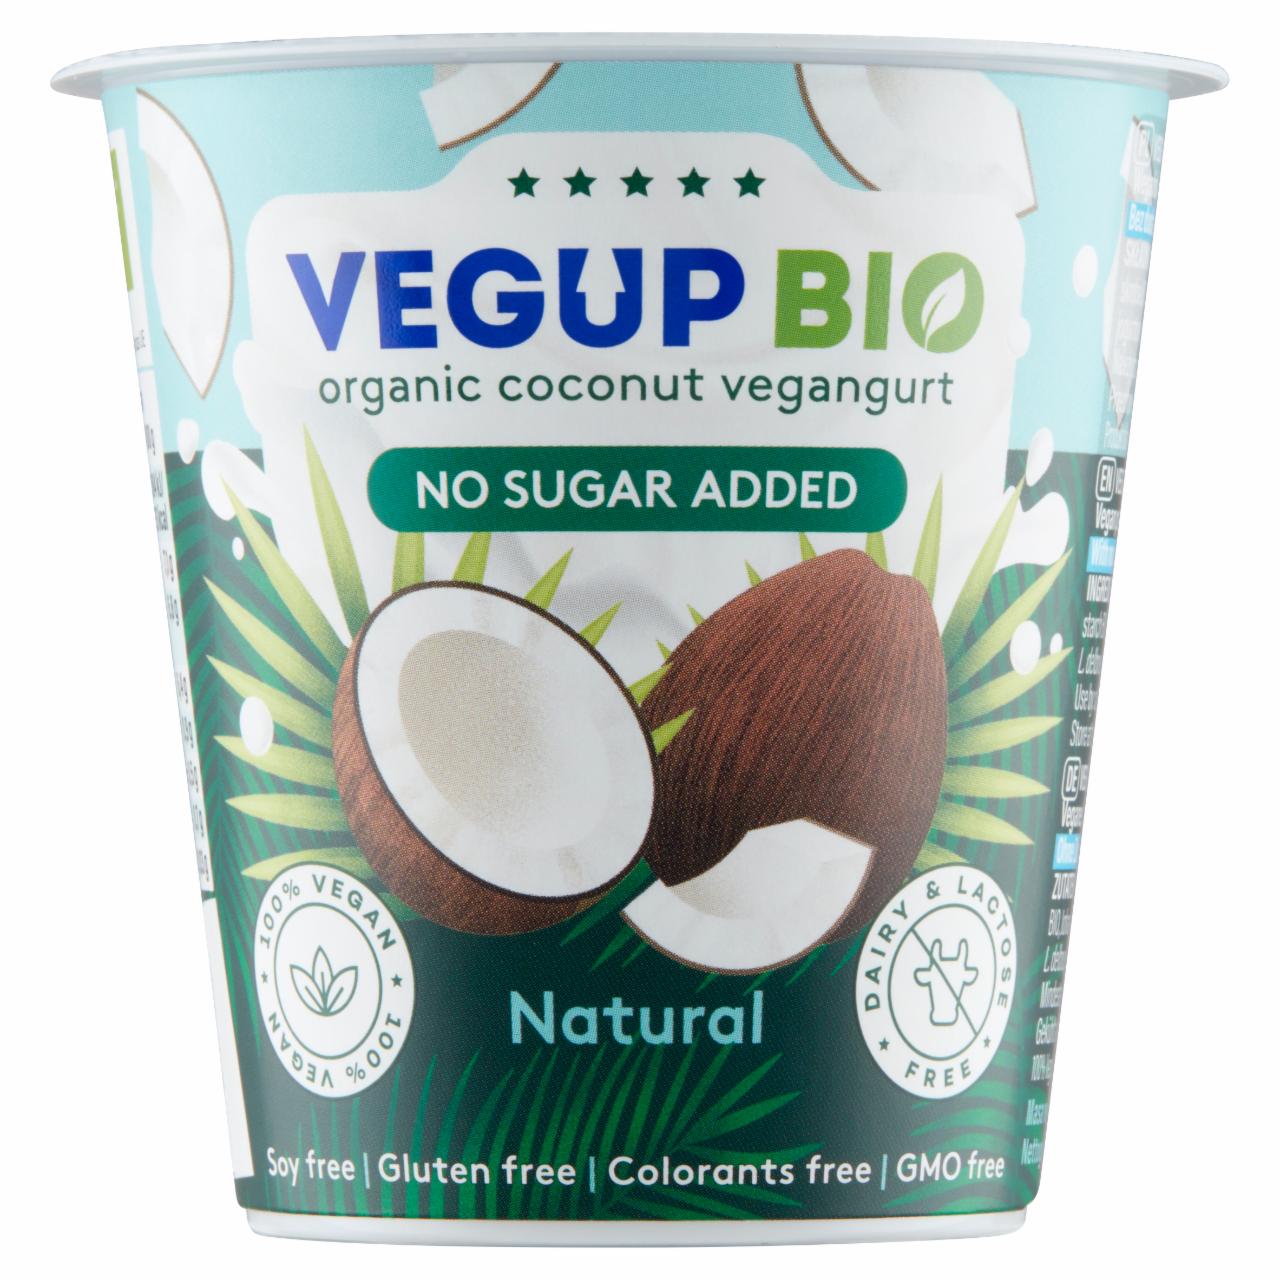 Zdjęcia - Vegup Bio Natural Kokosowy vegangurt 140 g